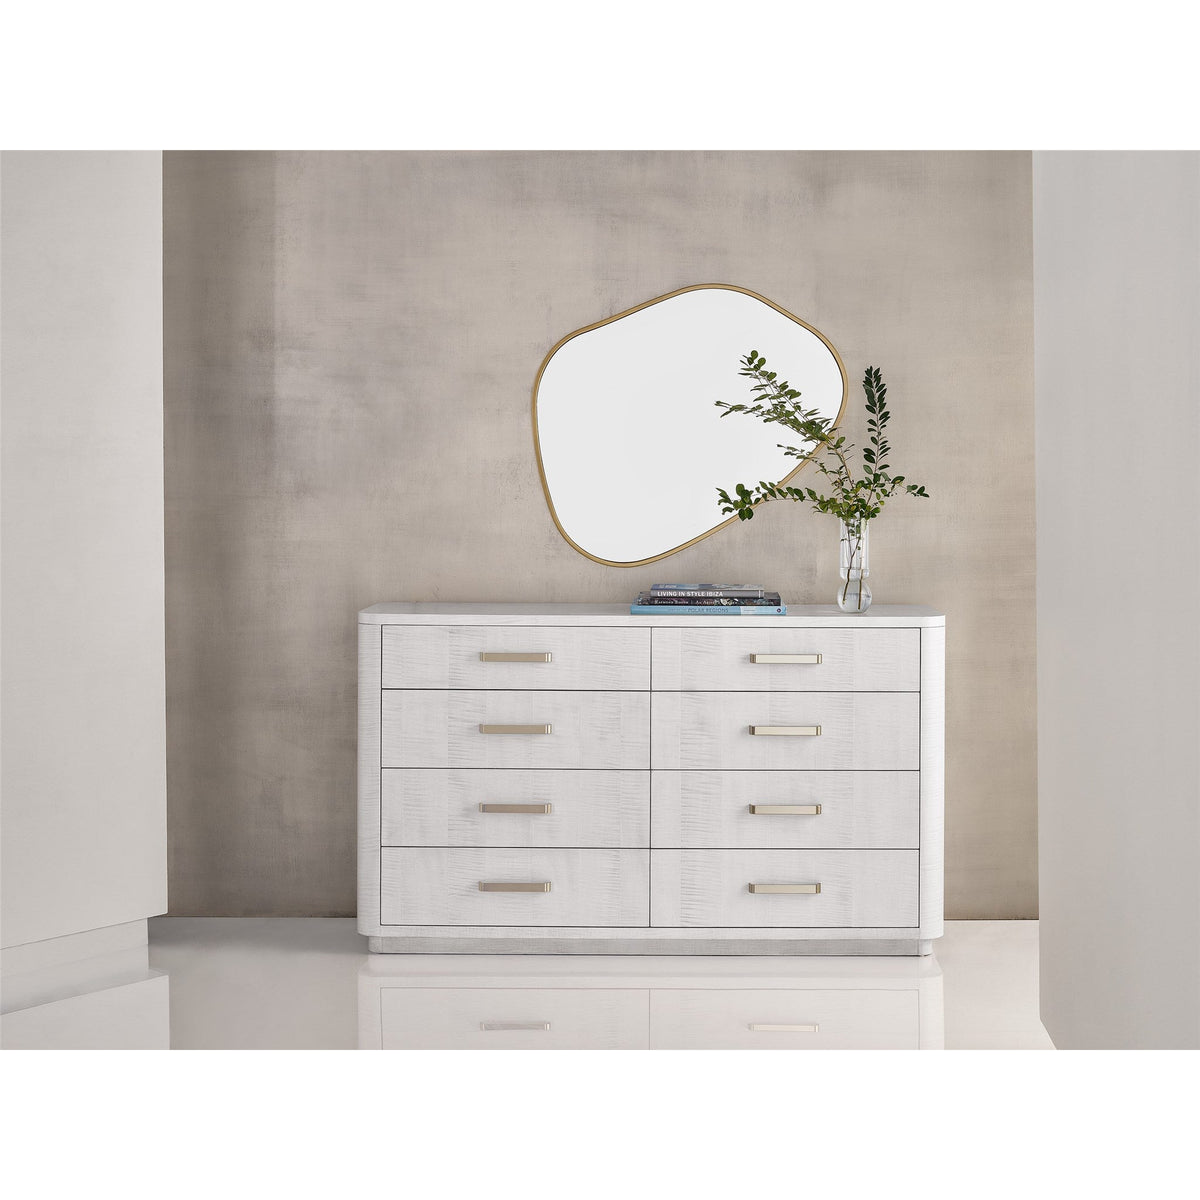 Gallett Accent Mirror Small - Be Bold Furniture